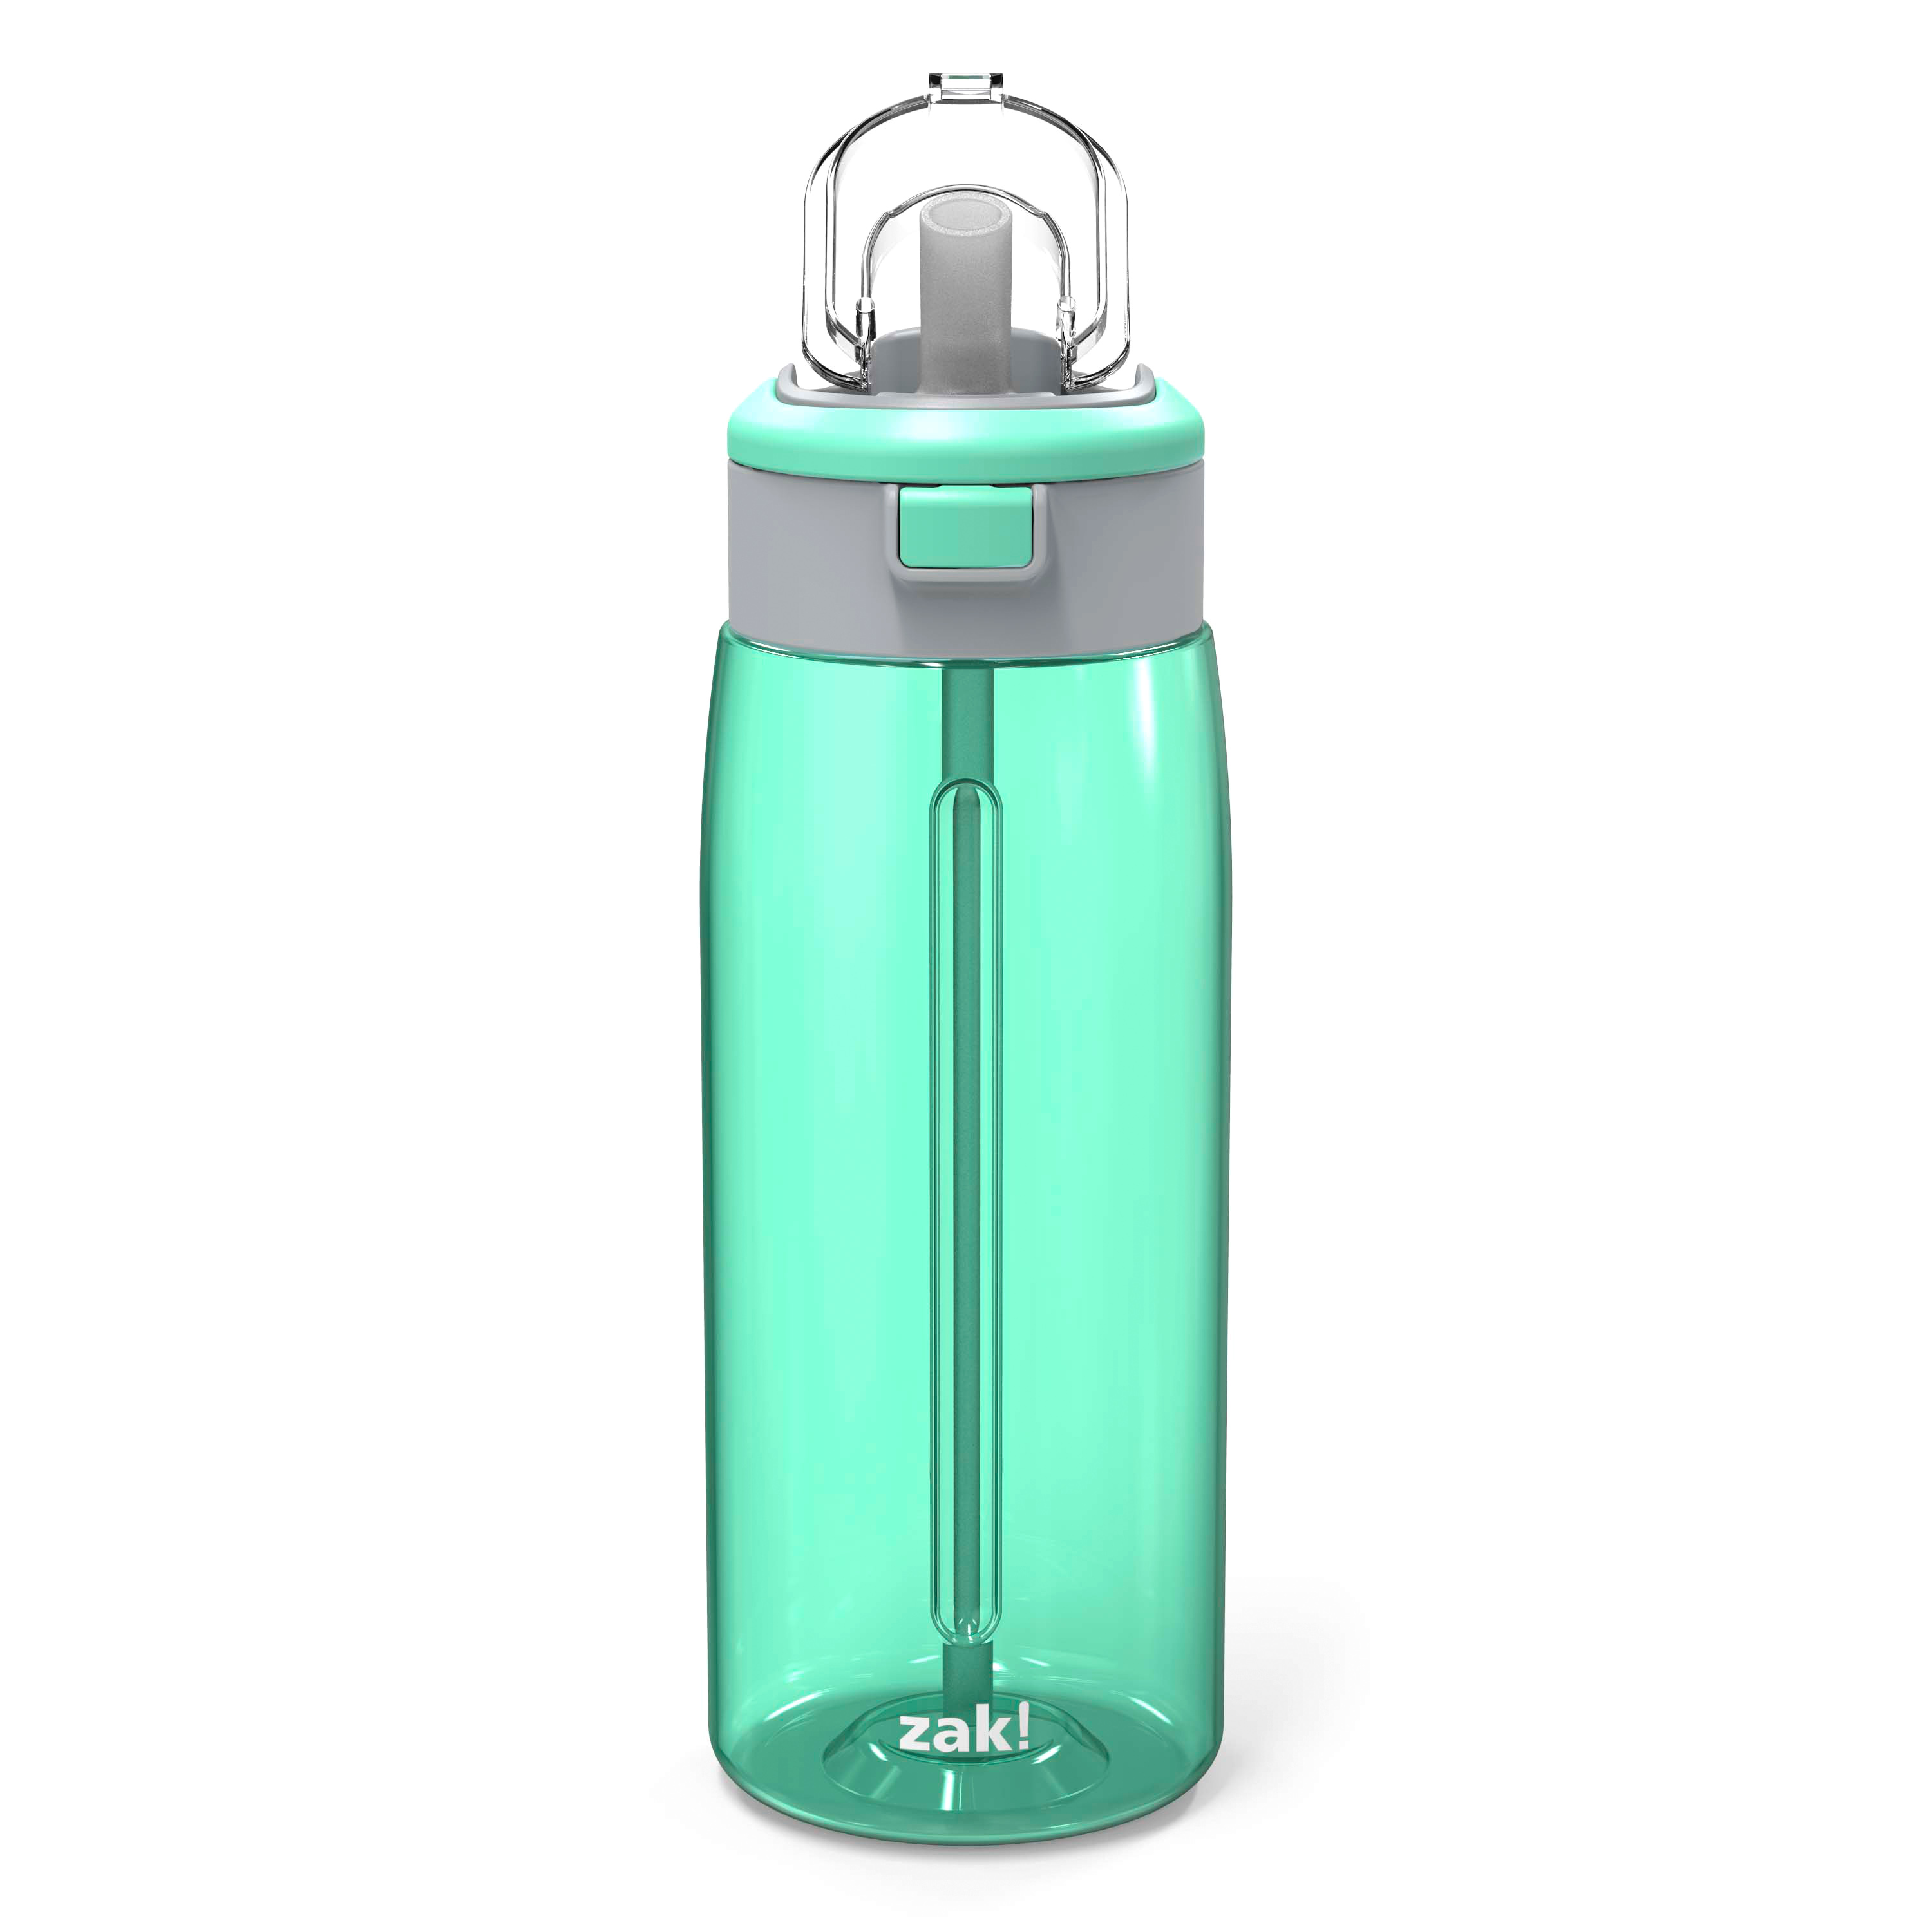 Genesis 32 ounce Reusable Plastic Water Bottle with Interchangeable Spouts, Neo Mint slideshow image 6